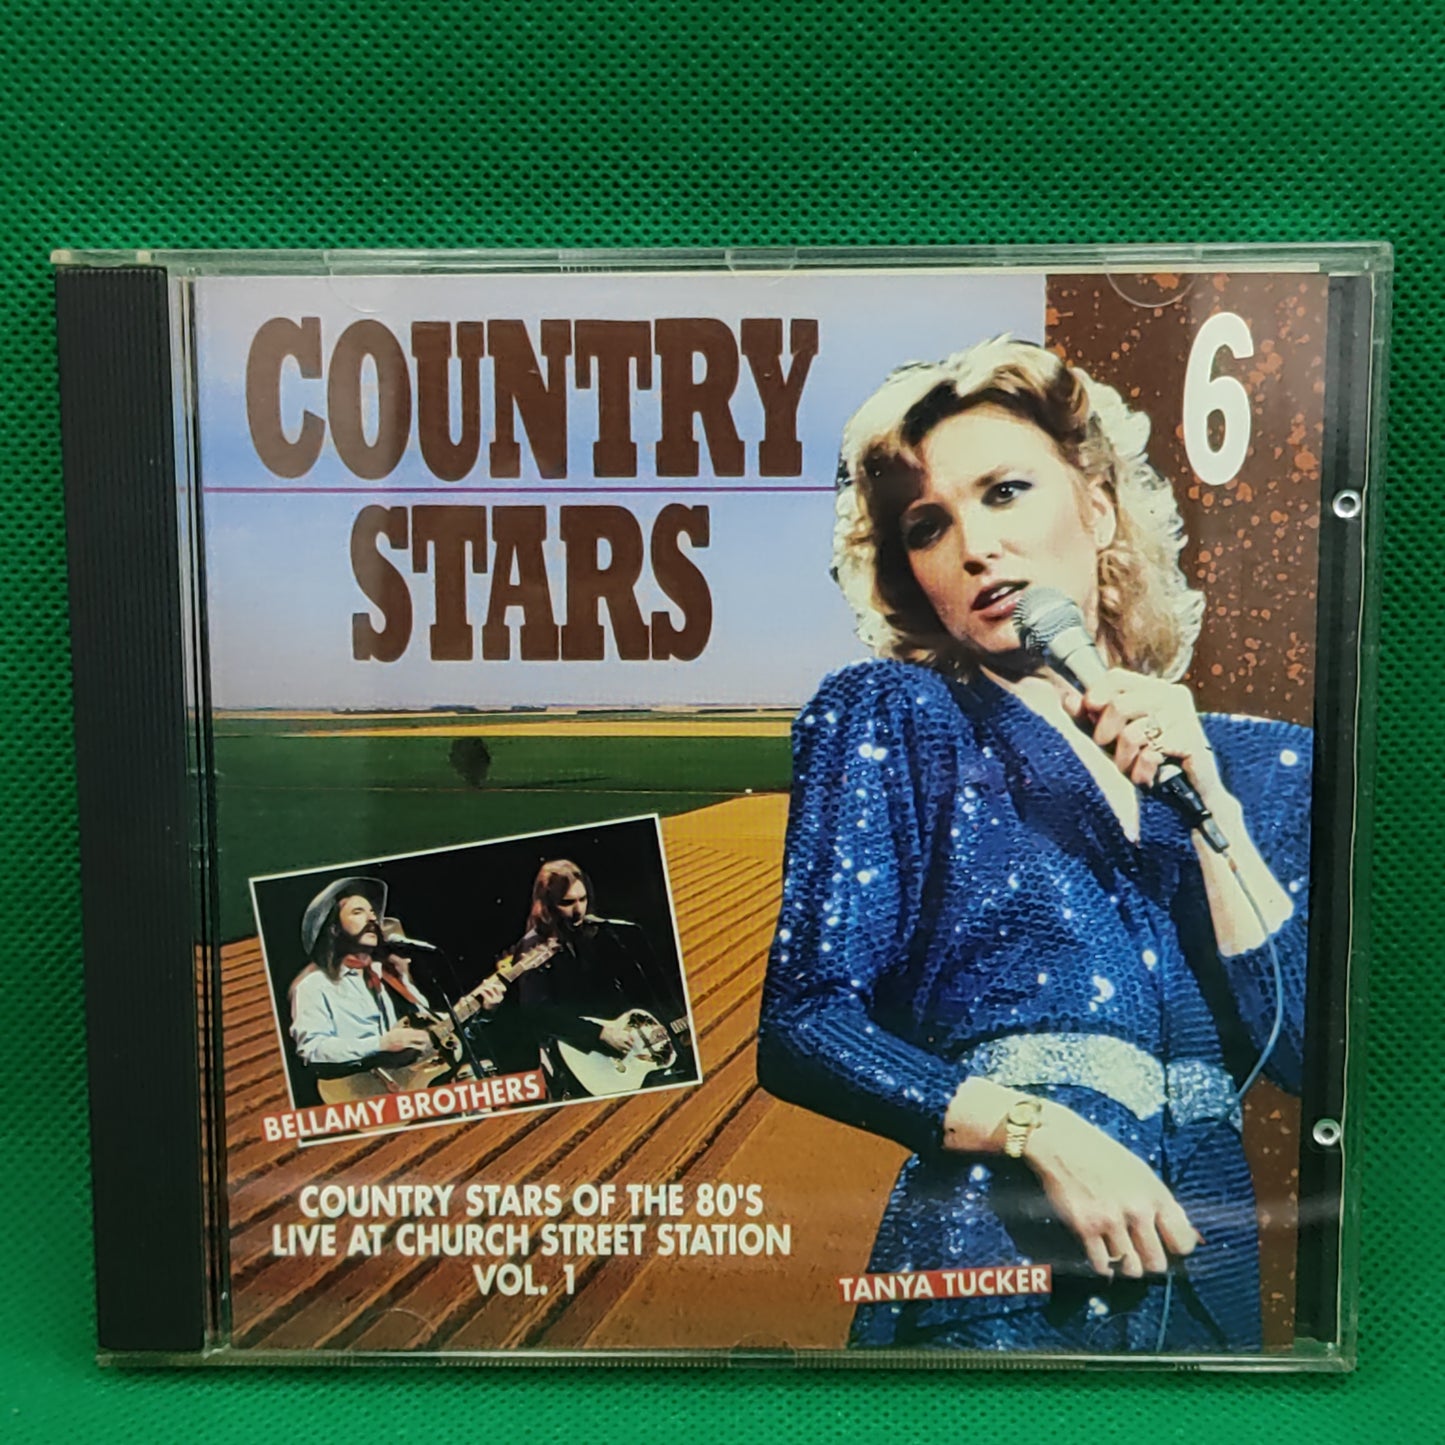 Country Stars Vol.6